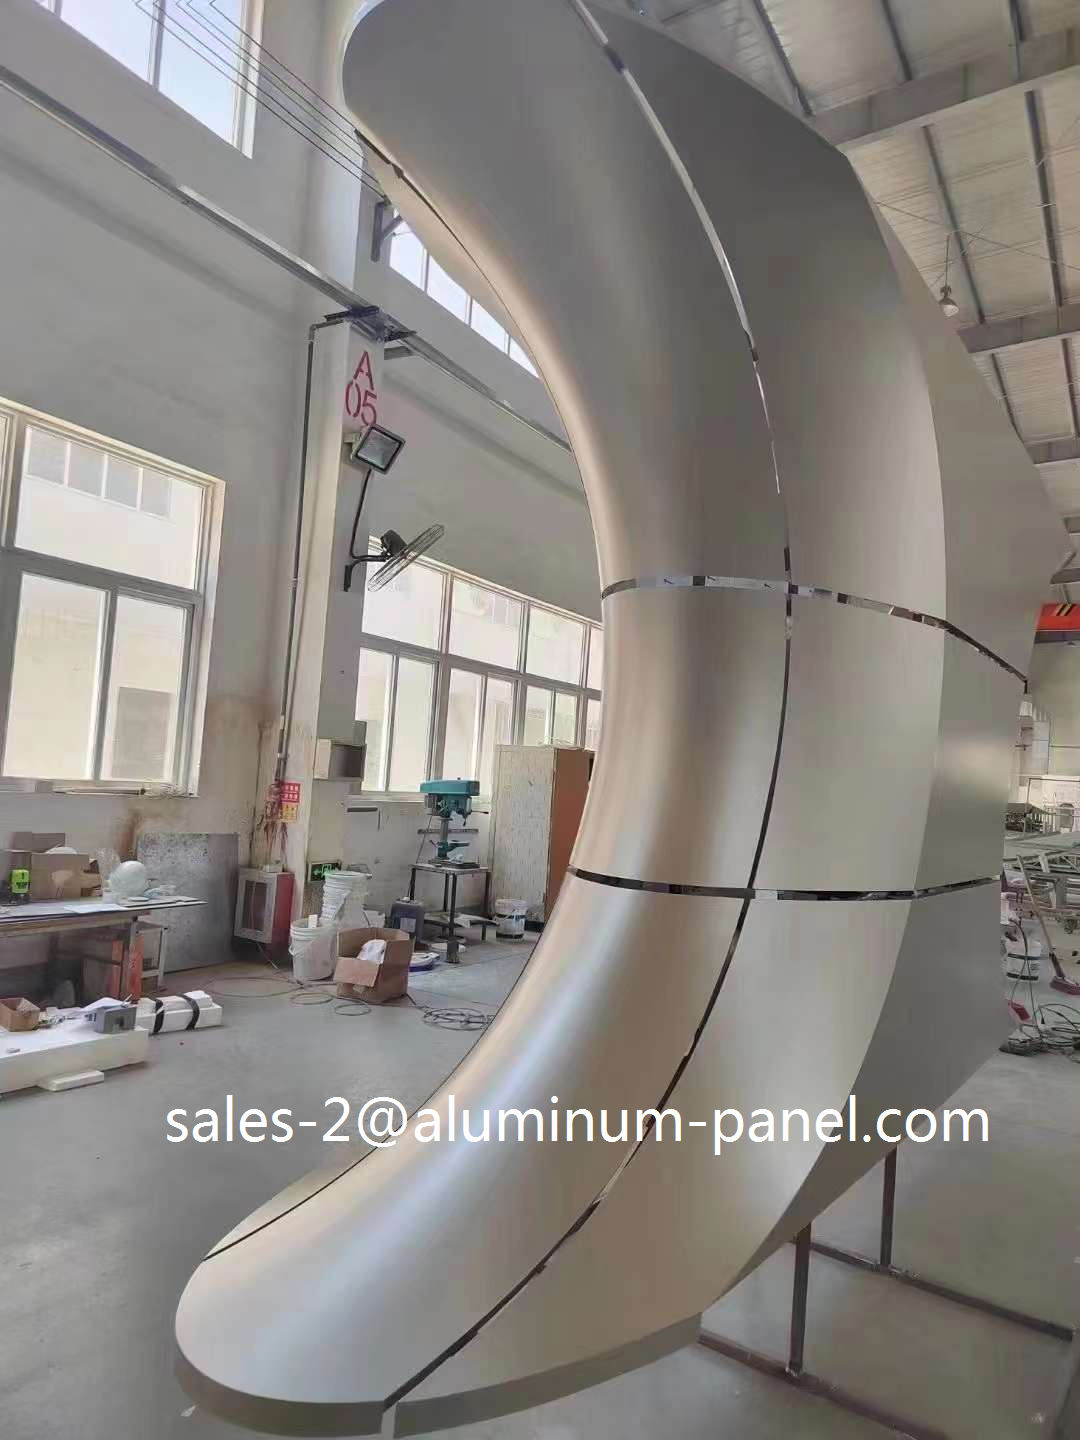 Interior double Curved aluminum panel support column cladding